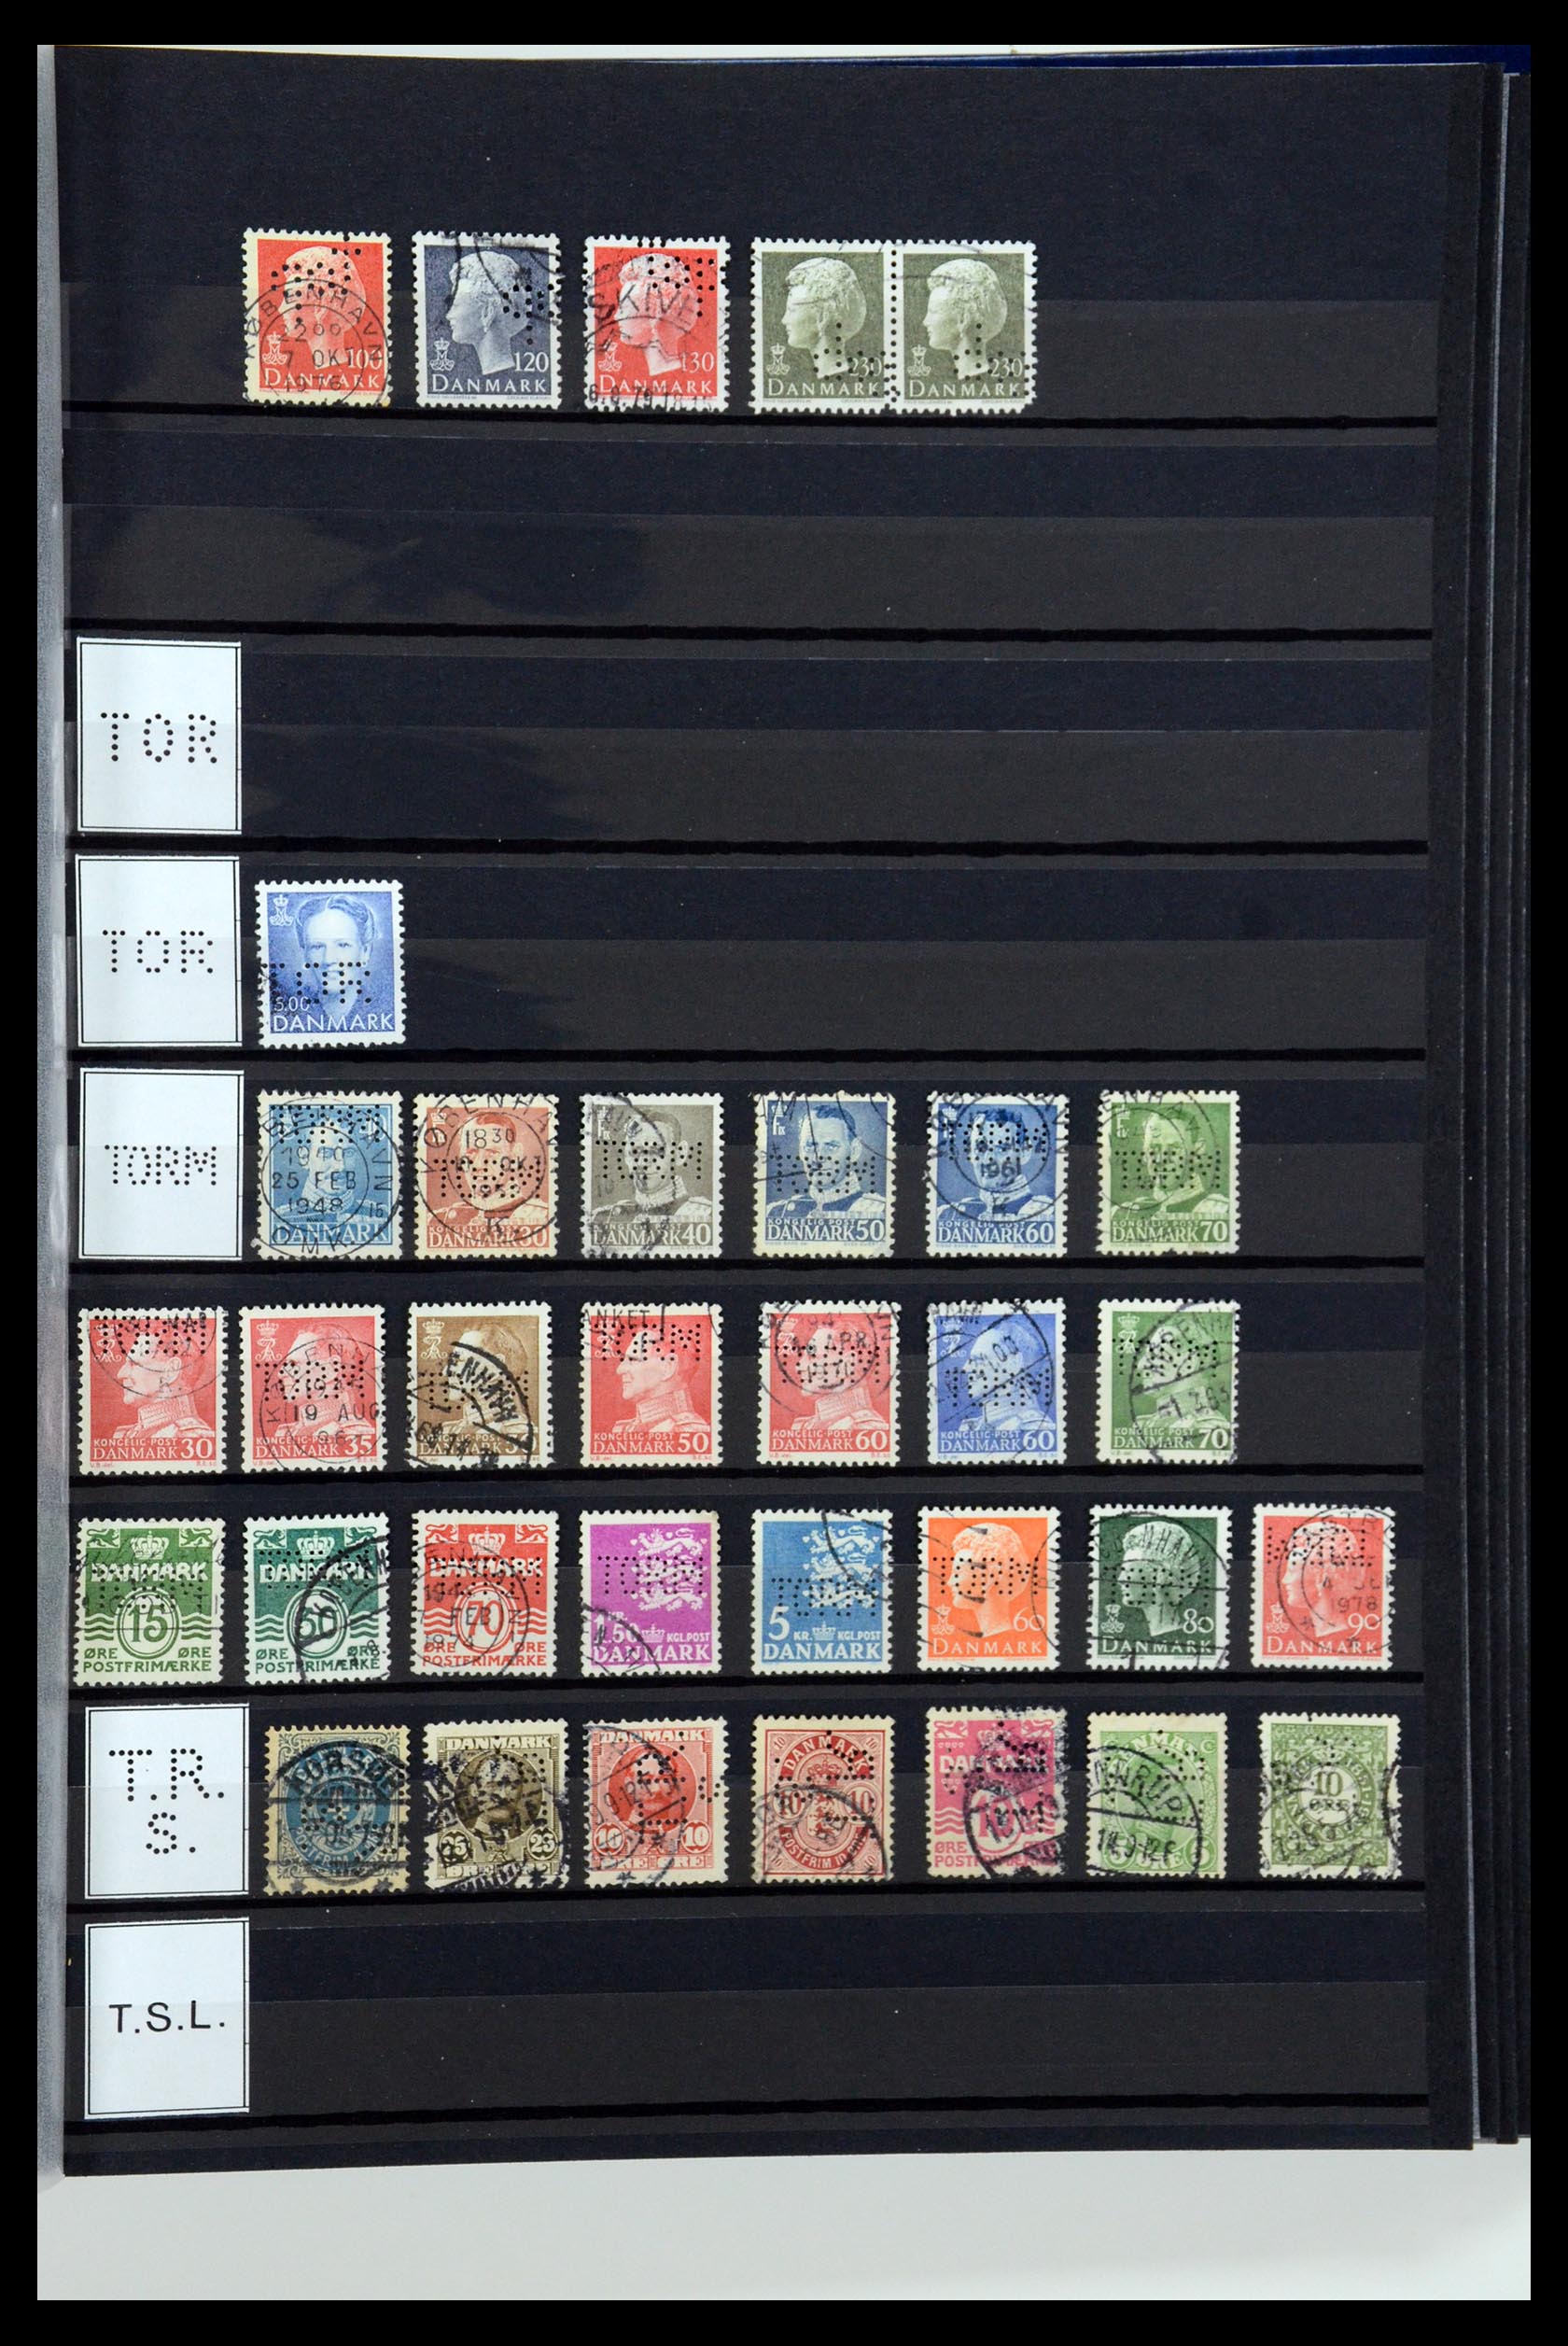 36396 217 - Stamp collection 36396 Denmark perfins.